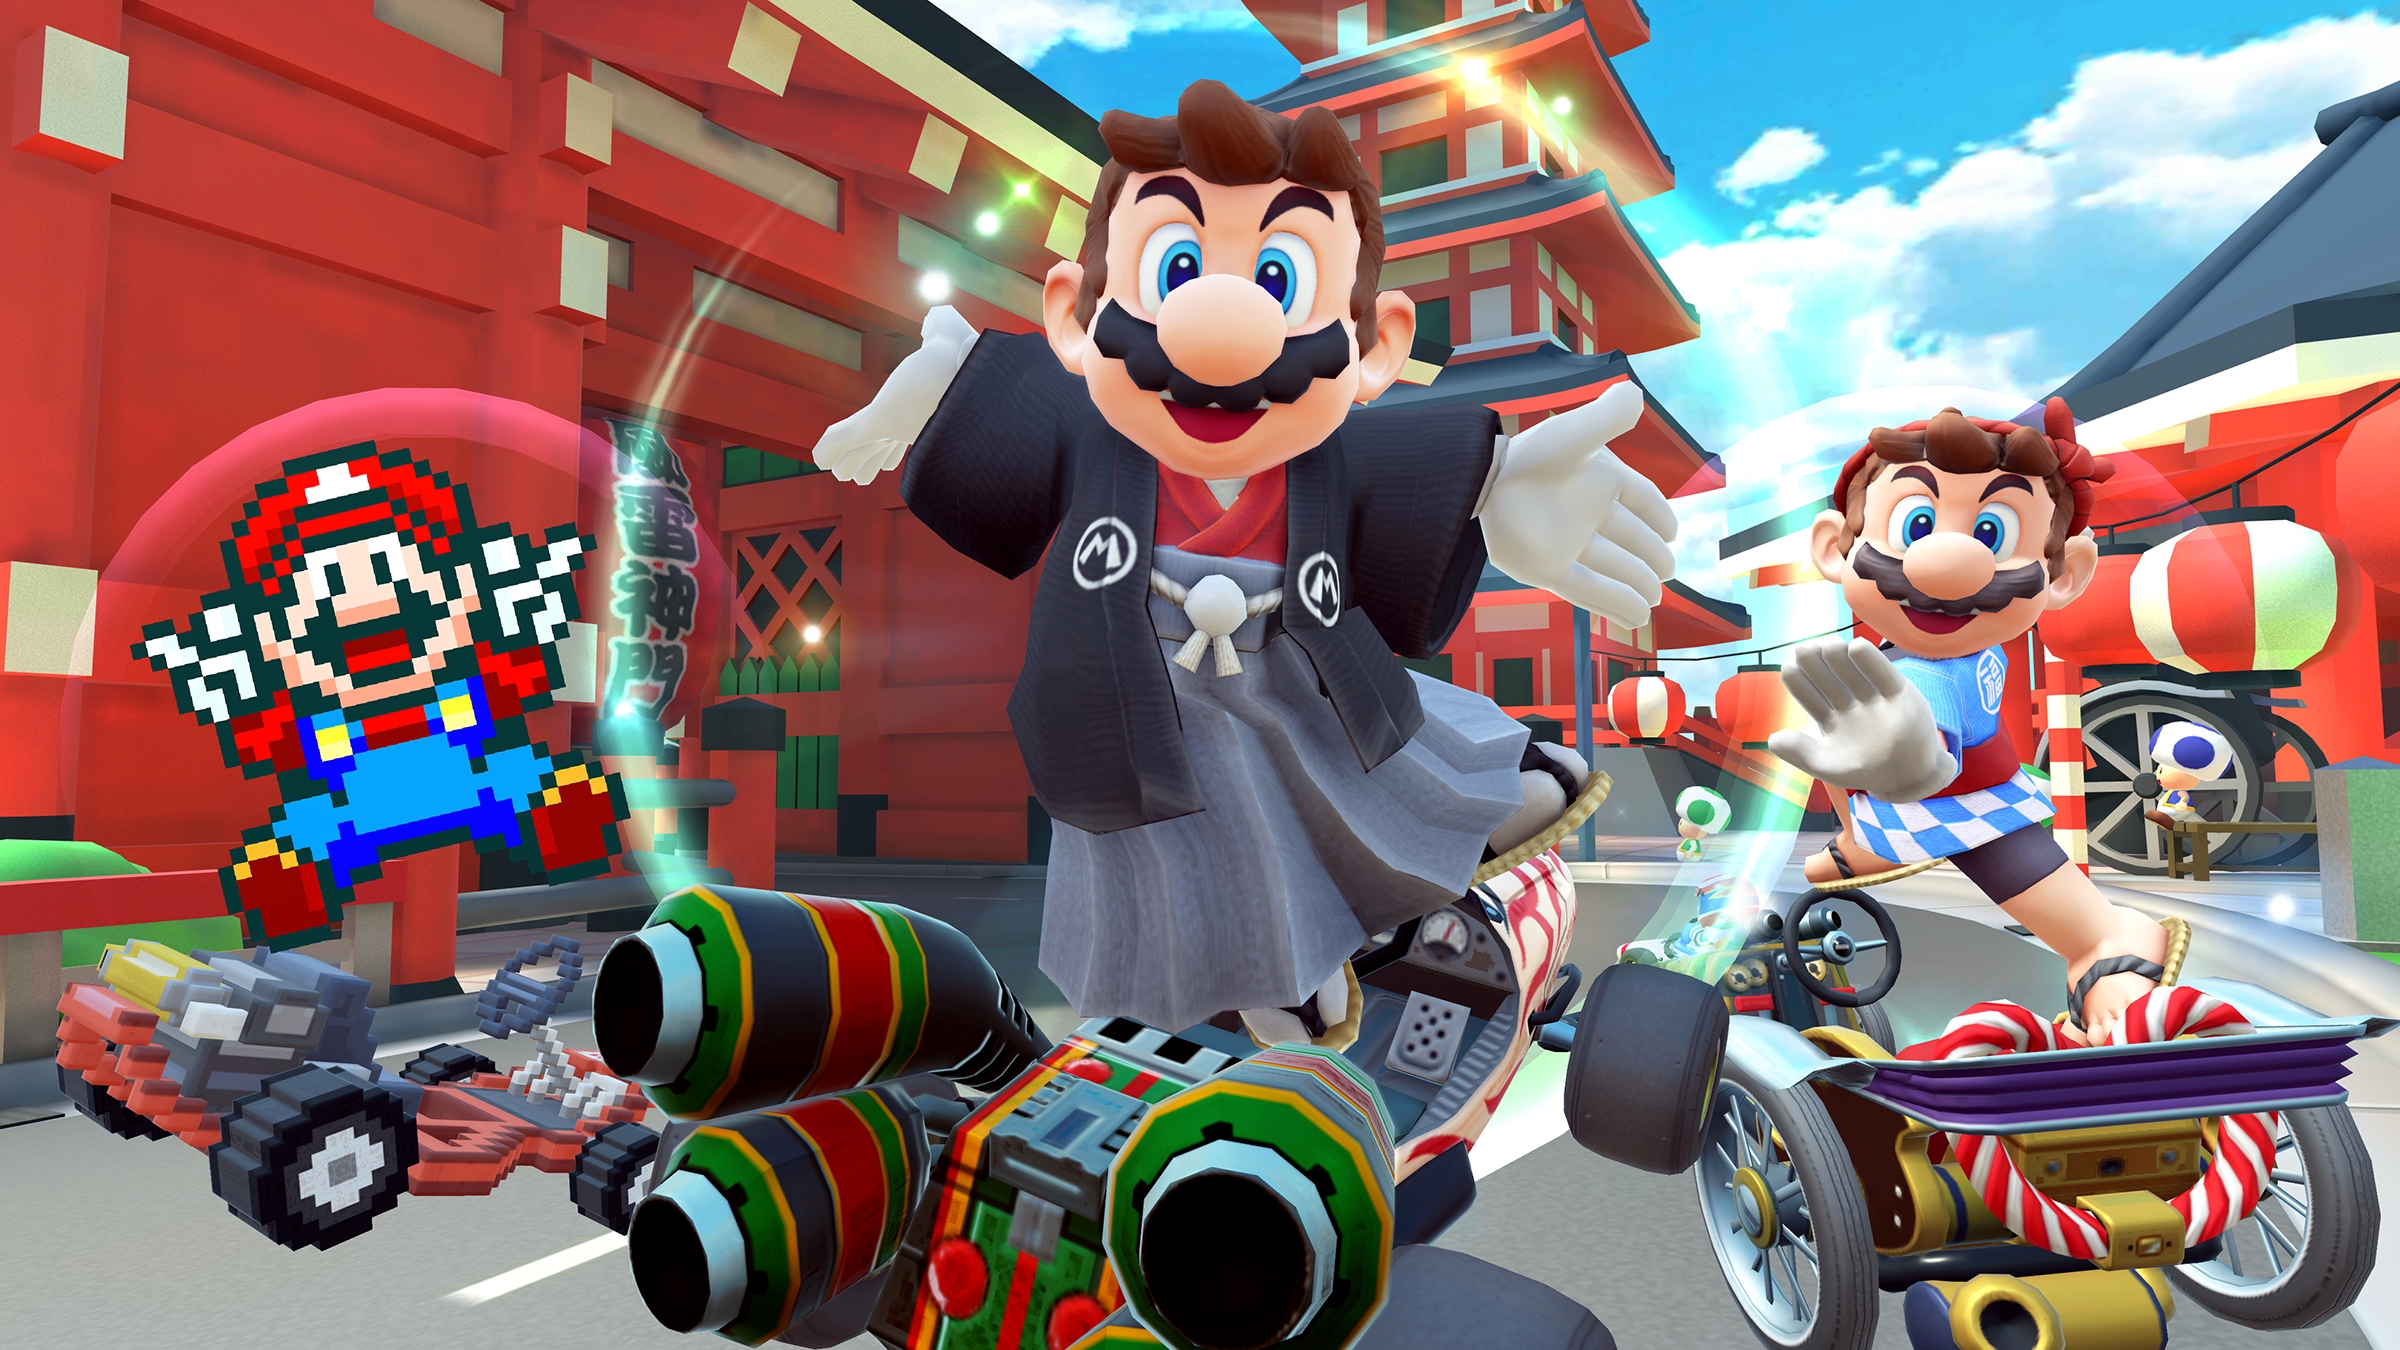 Mario Kart News